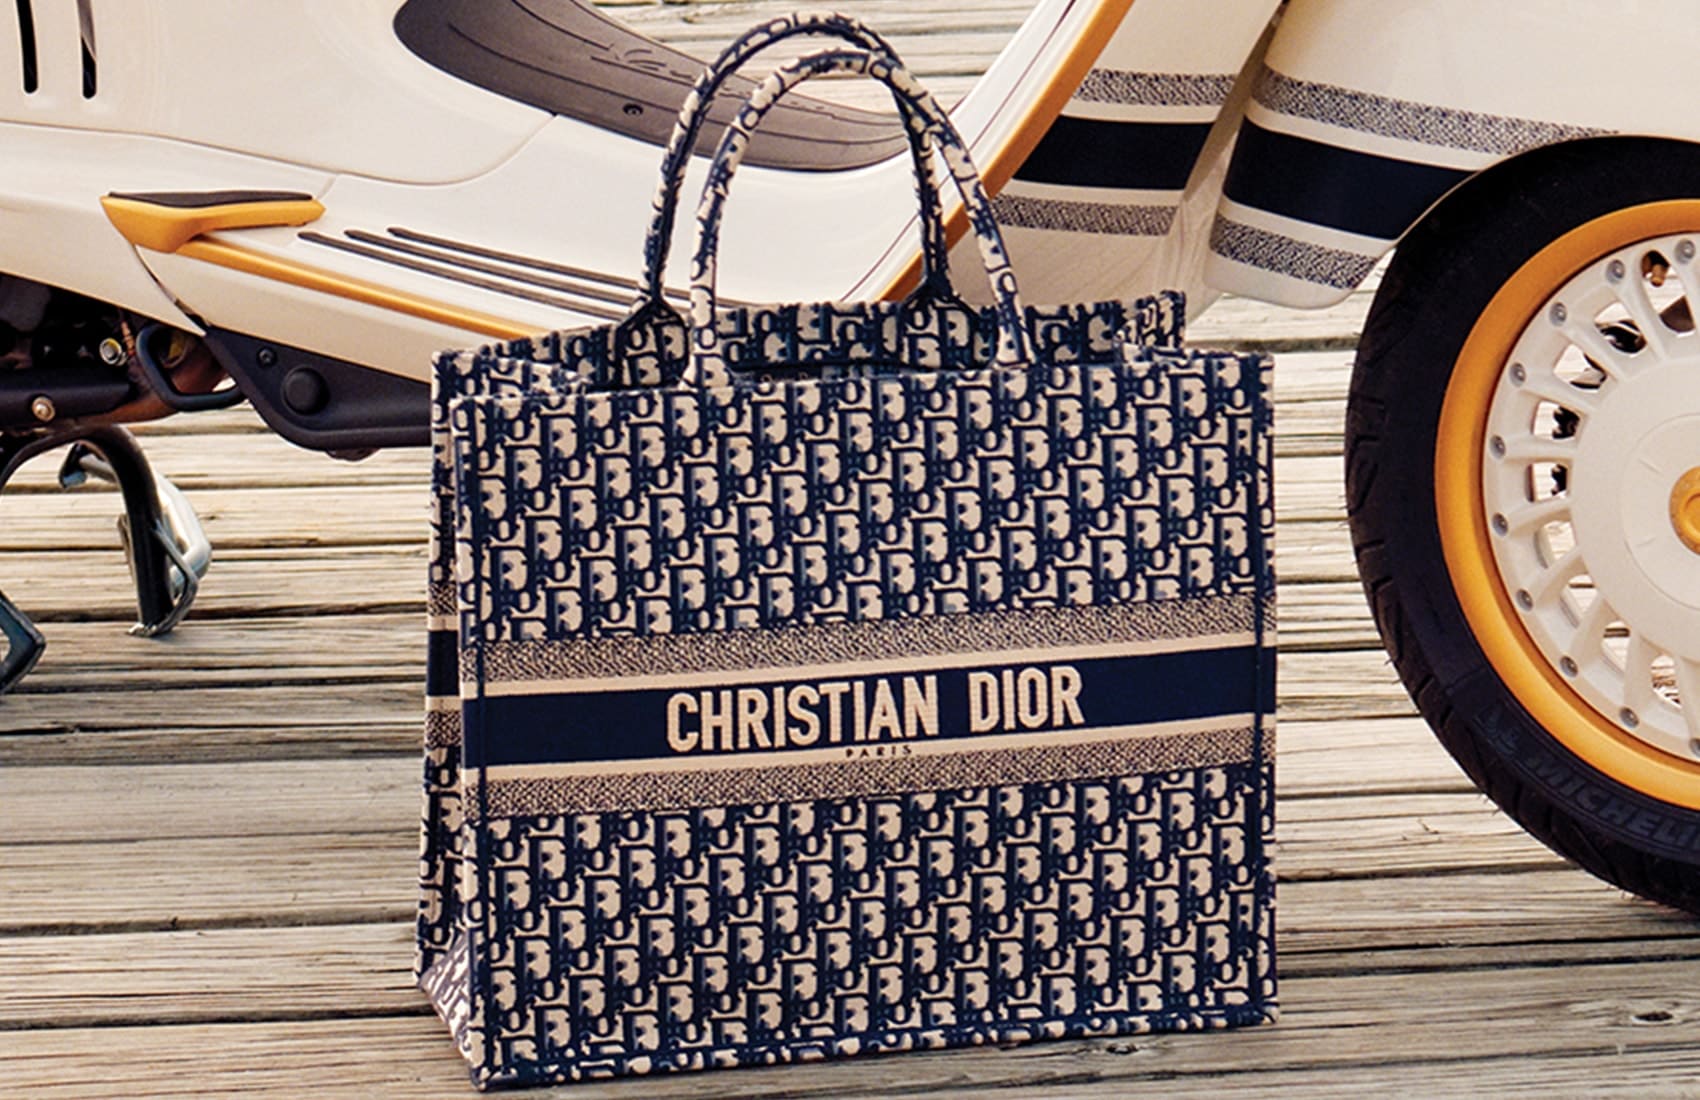 Donate and Get Vespa 946 Christian Dior